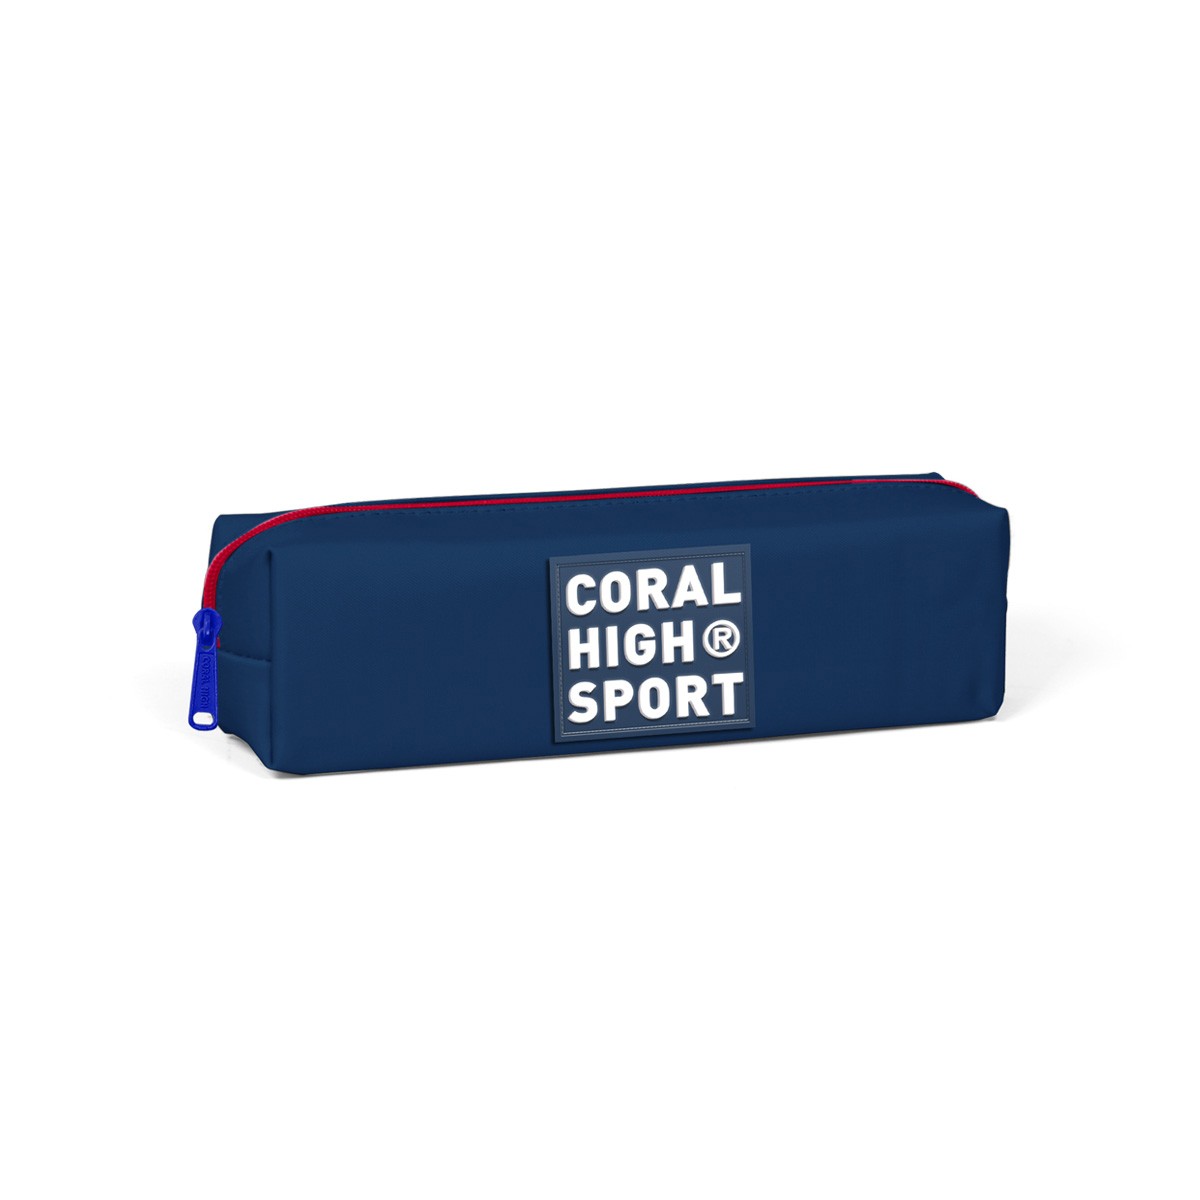 Coral High Sport Lacivert Kırmızı Tek Bölmeli Kalem Çantası 22347